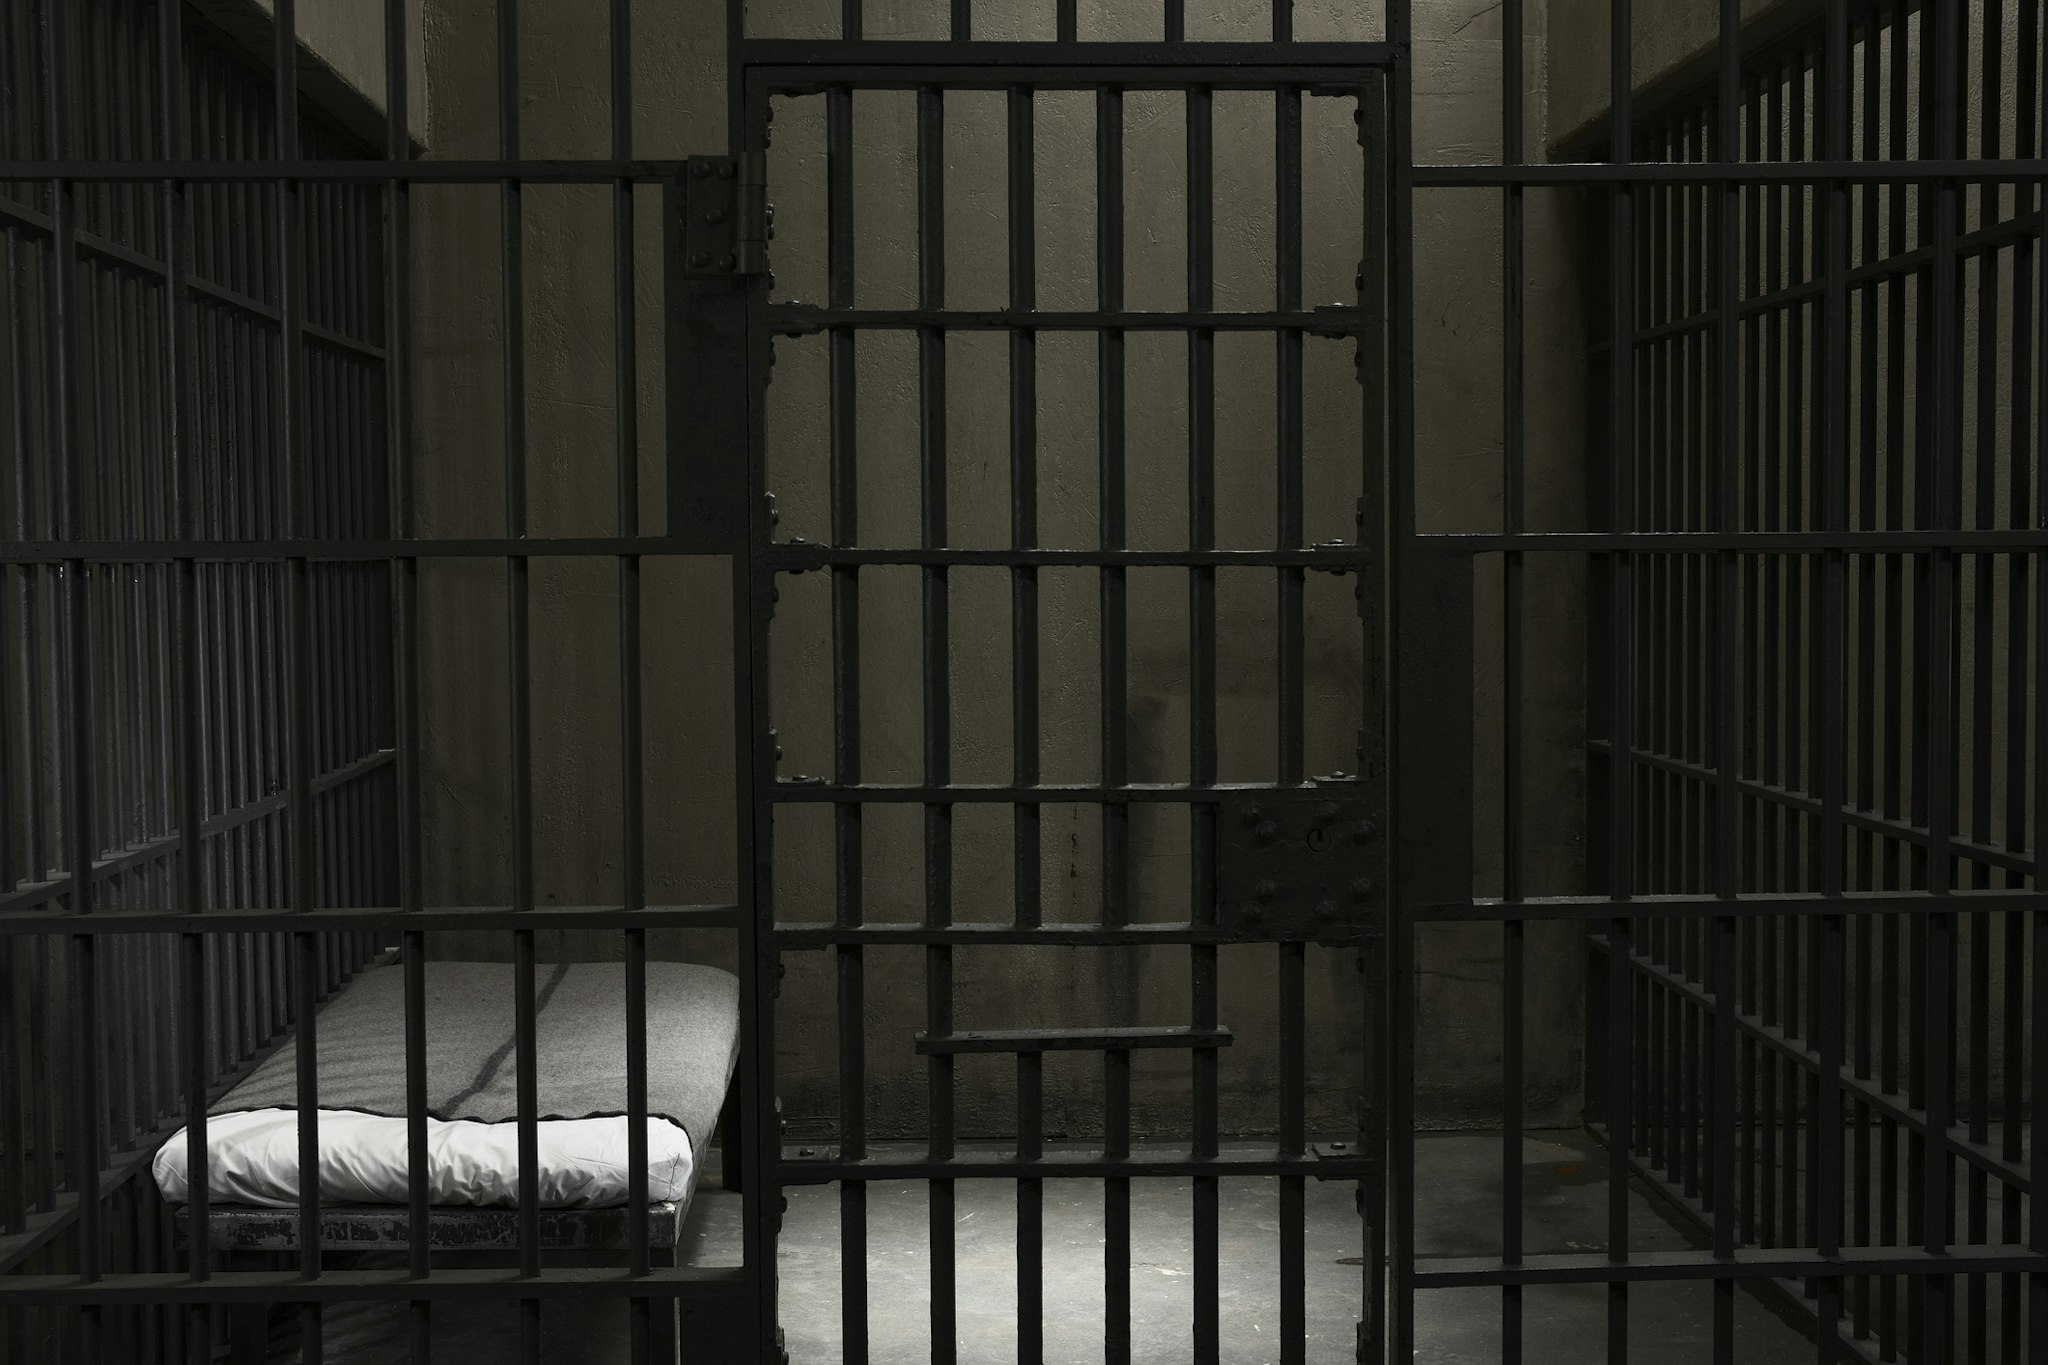 Empty prison cell - stock photo